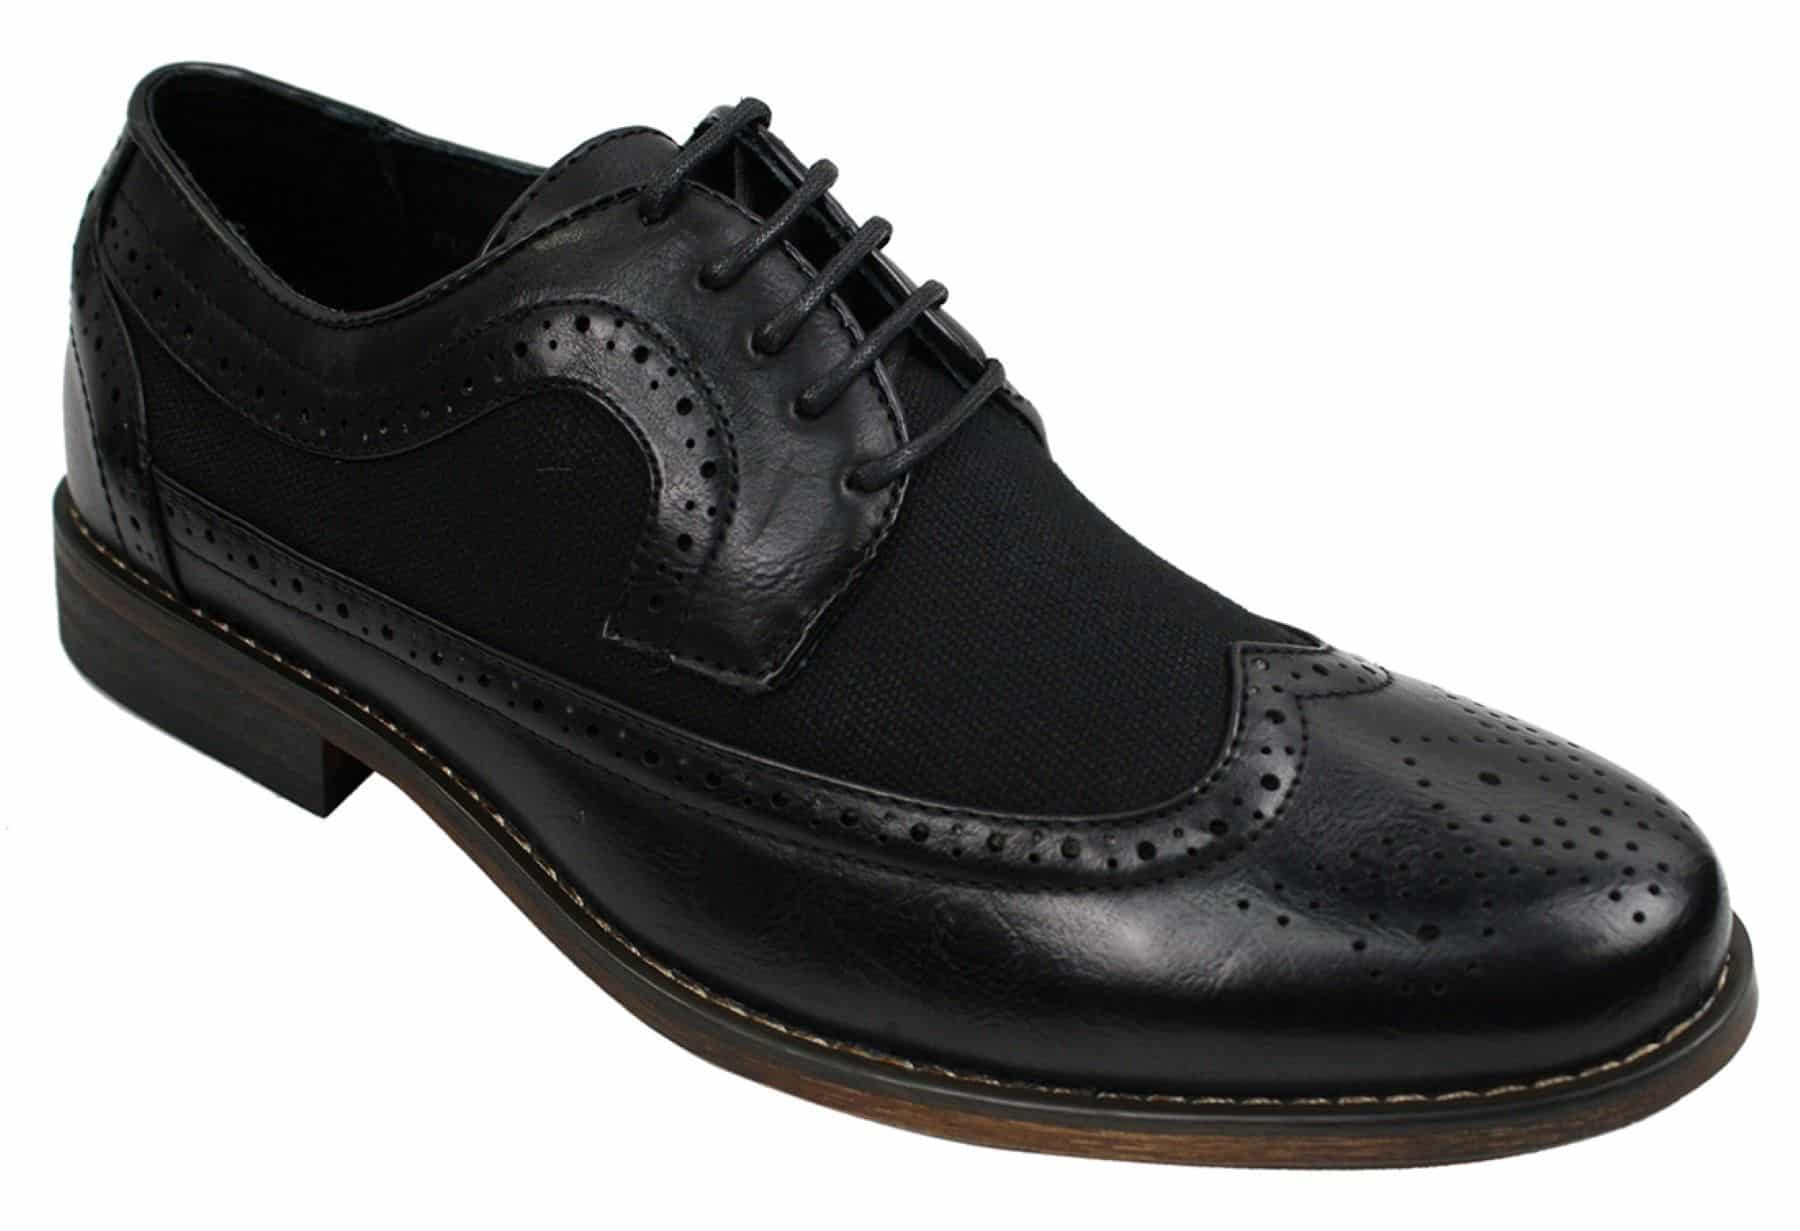 Mens Brogues Leather Shoes Italian Designer Smart Casual Brown Black ...